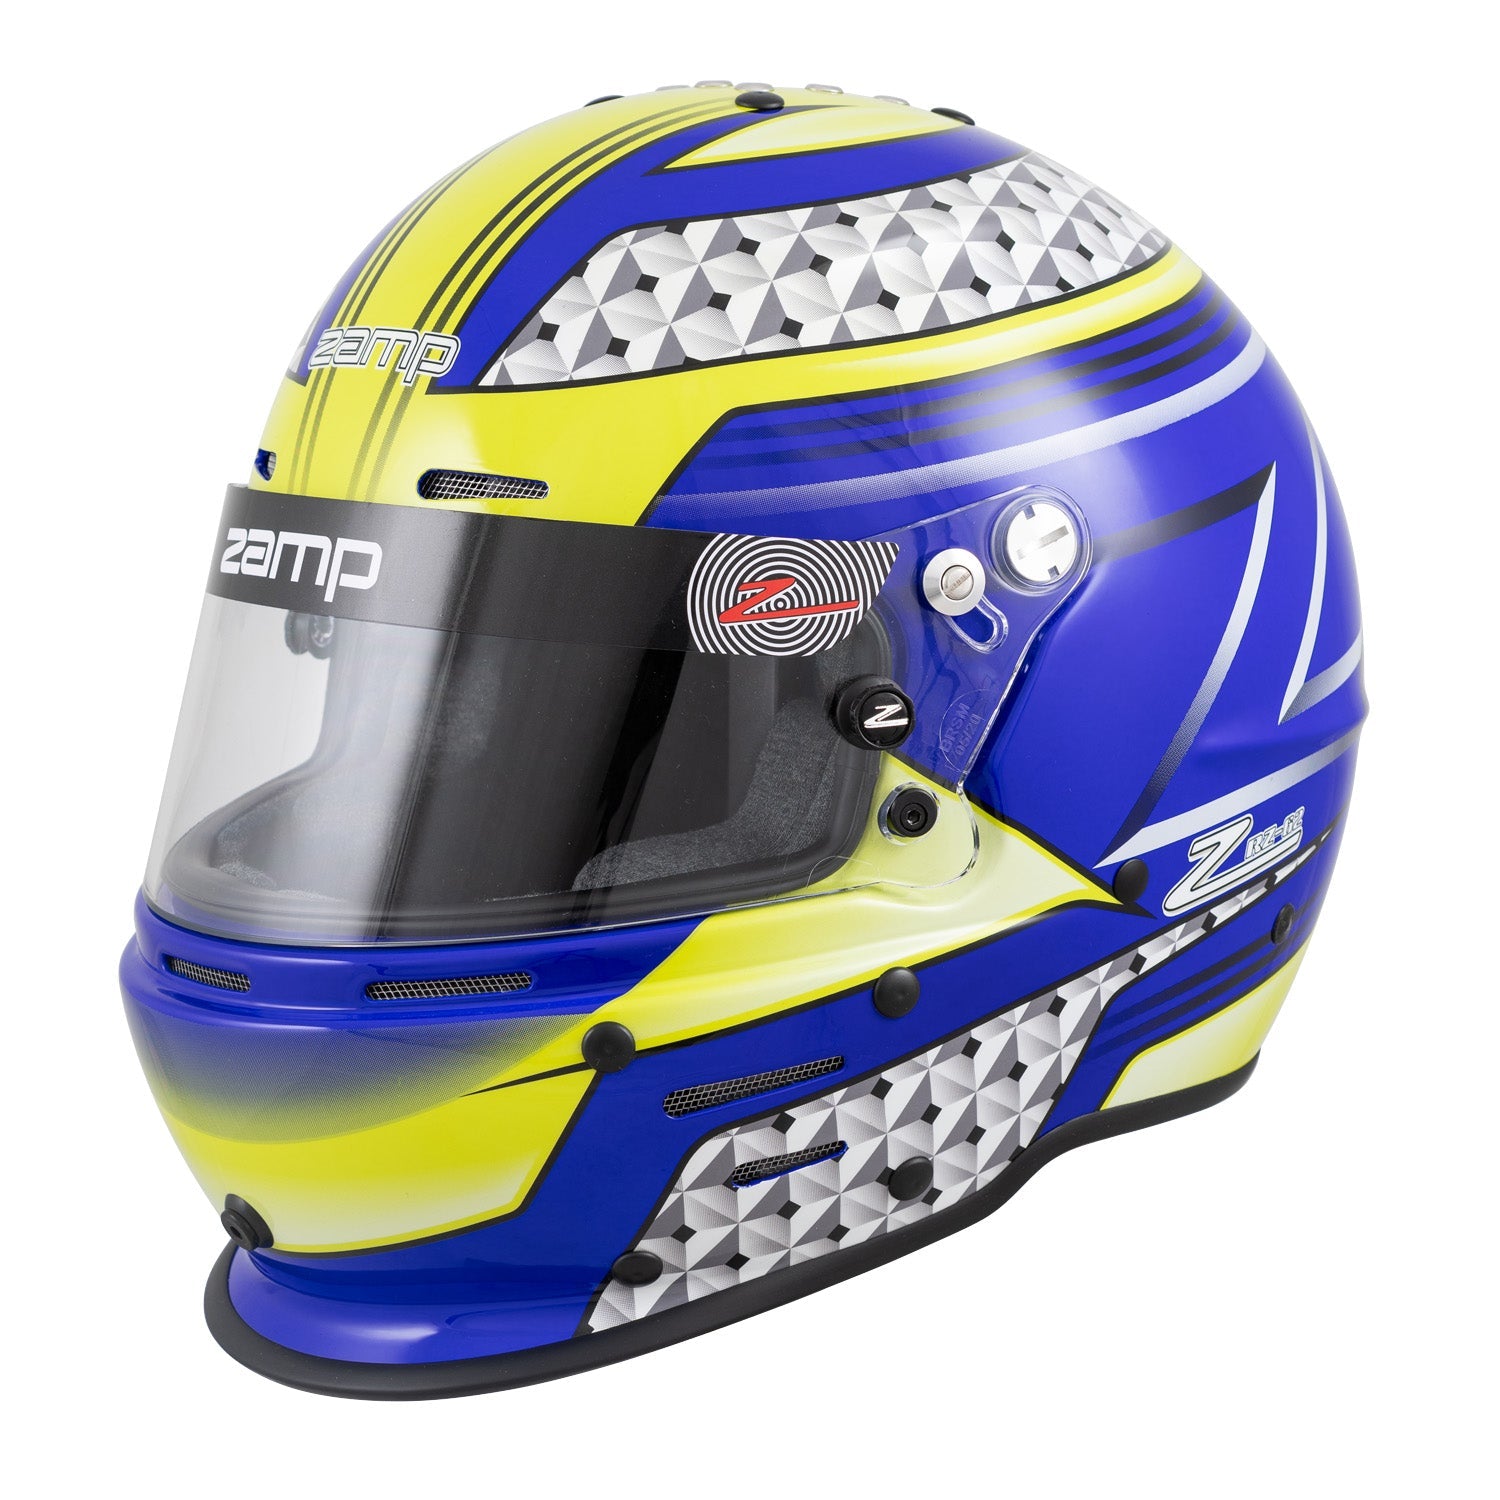 Zamp | RZ-62 Aramid Graphic Snell SA2020 Racing Helmet